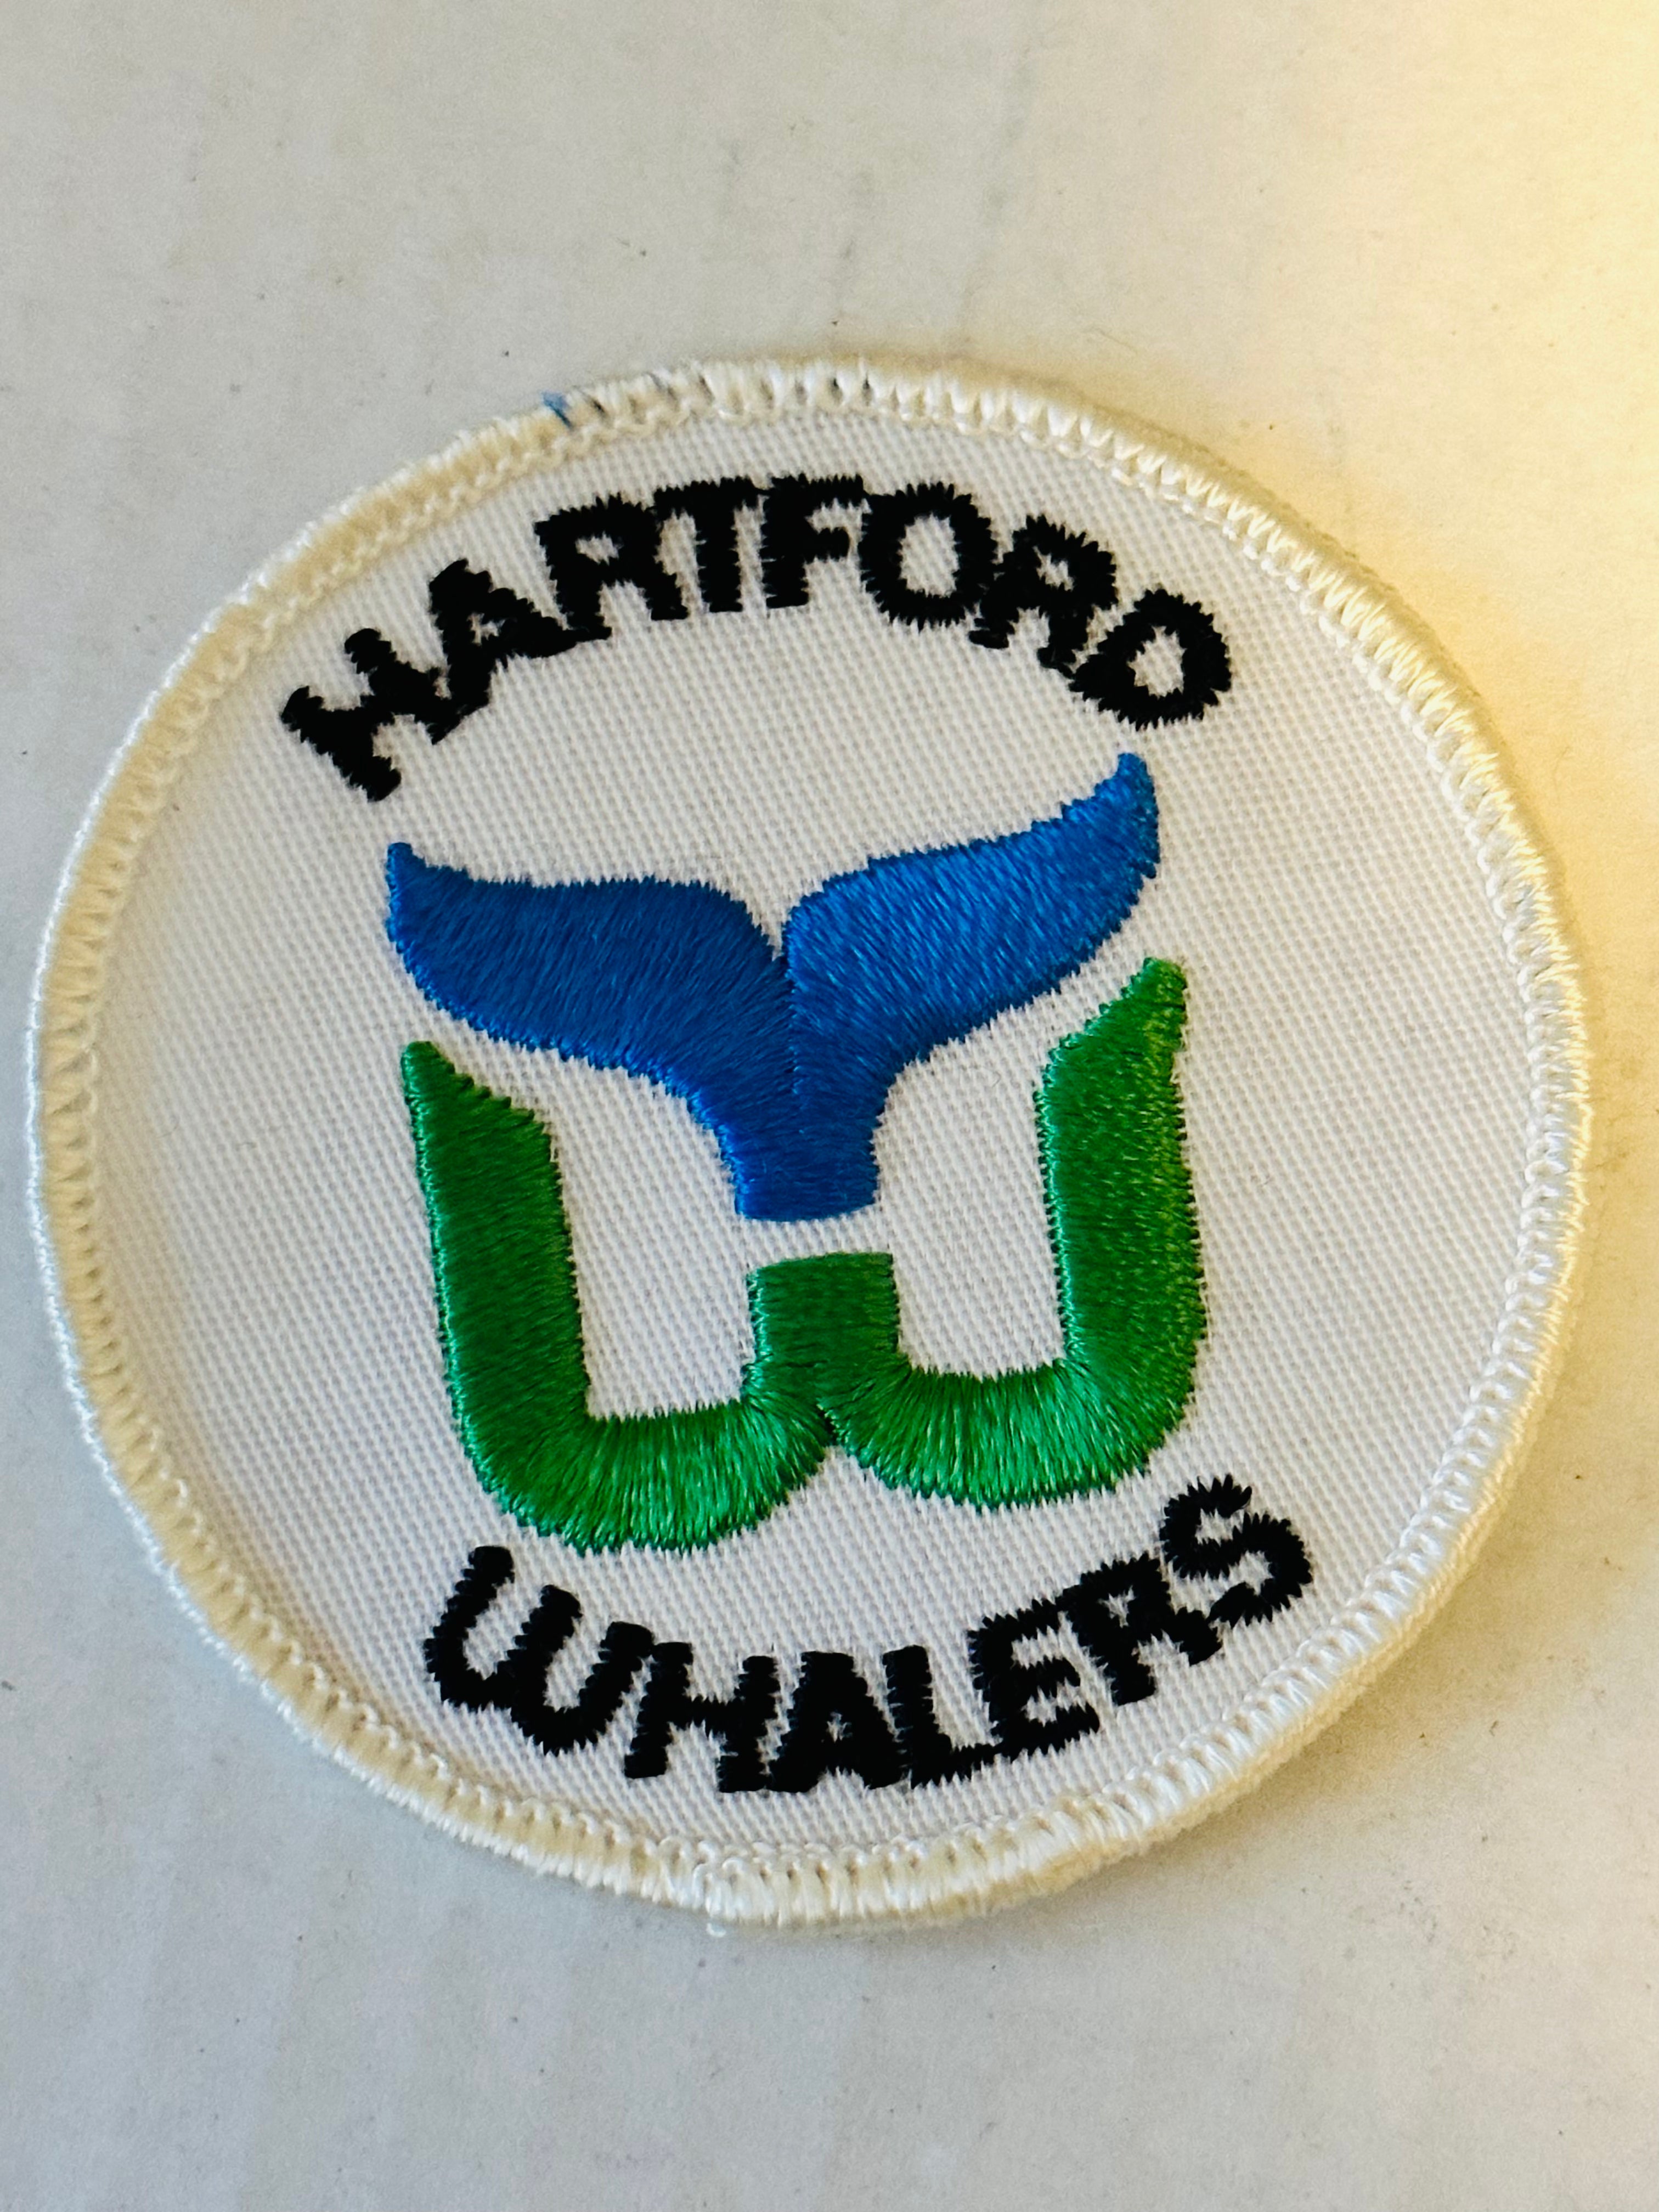 Hartford Whalers original 3x3 hockey patch 1970s